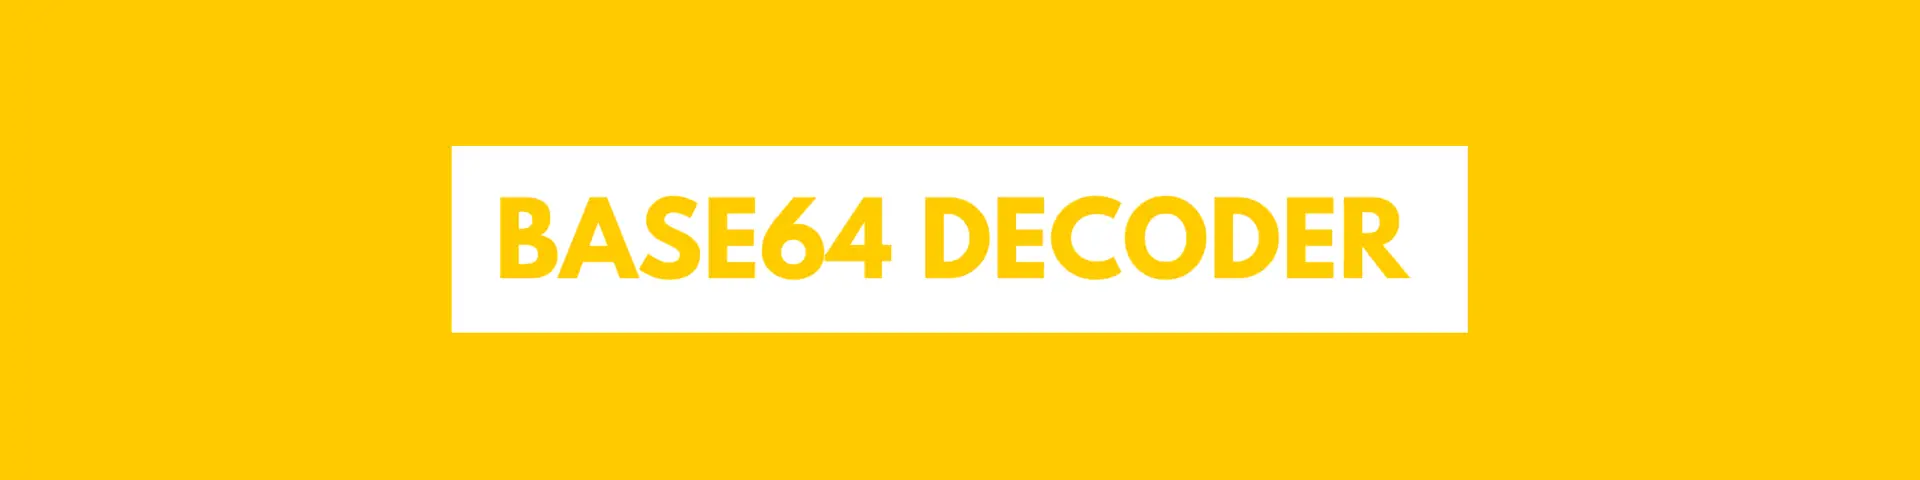 Base64 Decoder Tool Thumbnail